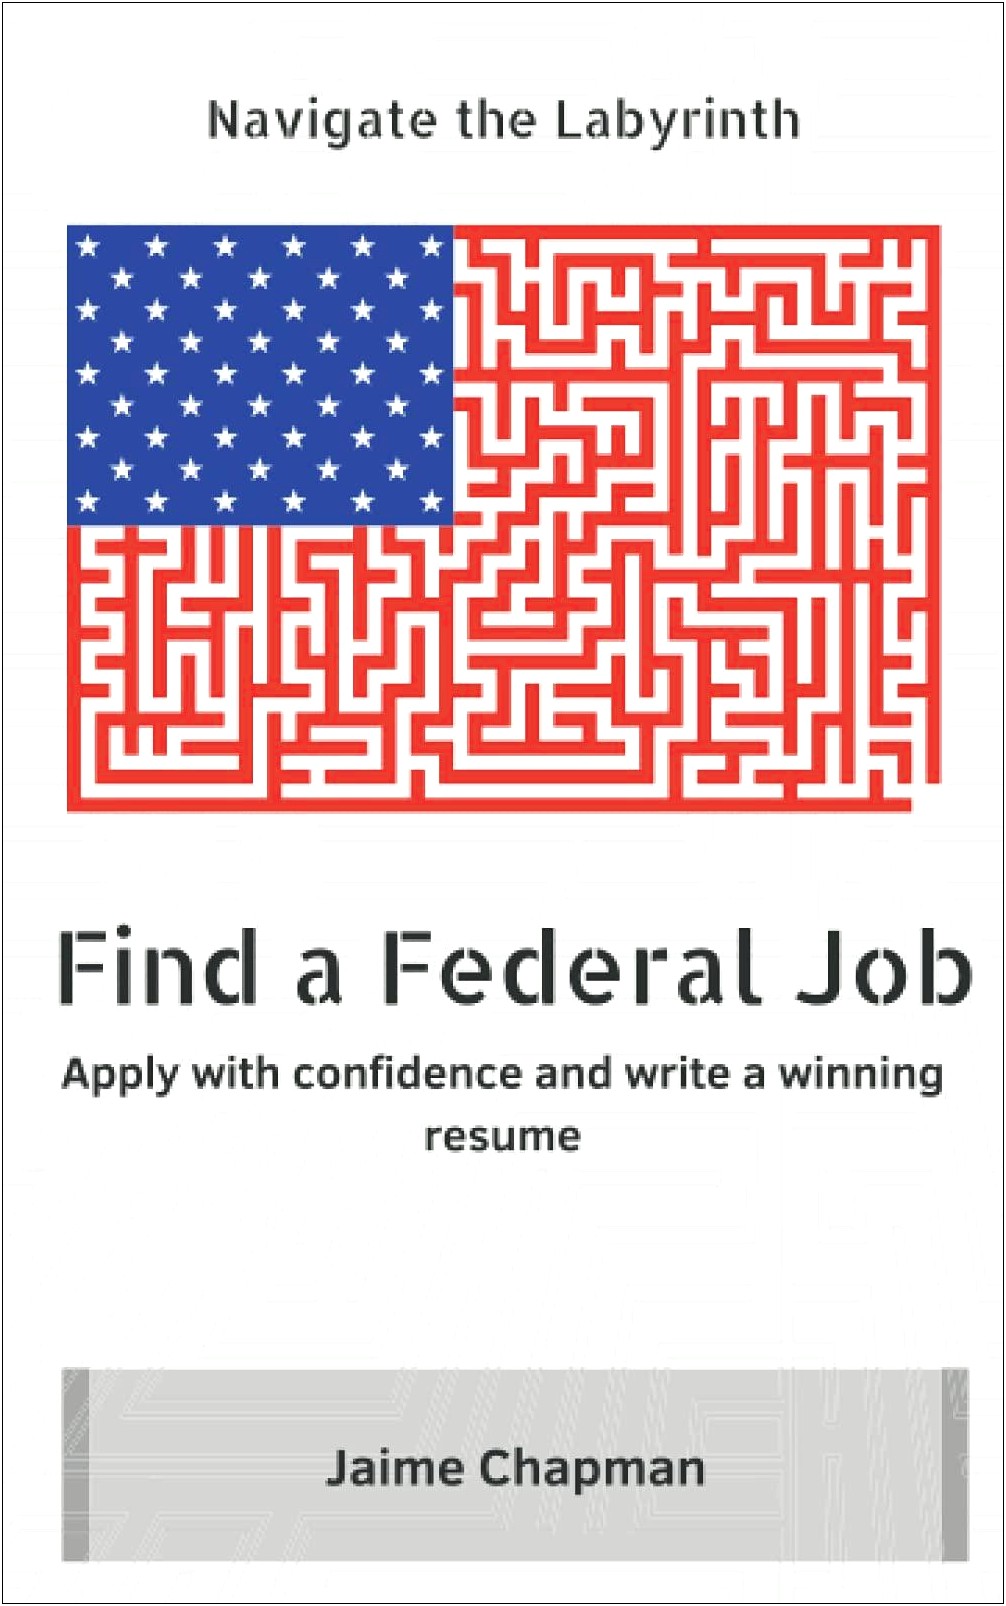 Federal Job Application Job Resume Amazon